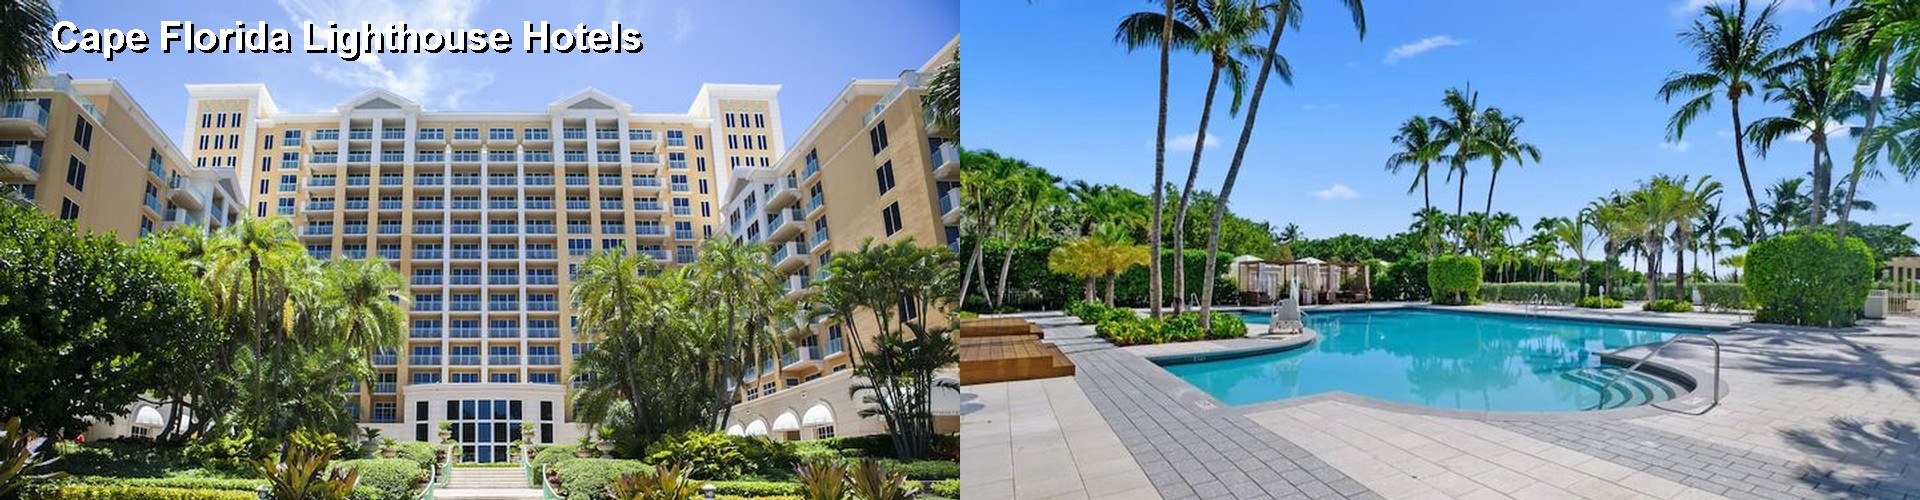 5 Best Hotels near Cape Florida Lighthouse